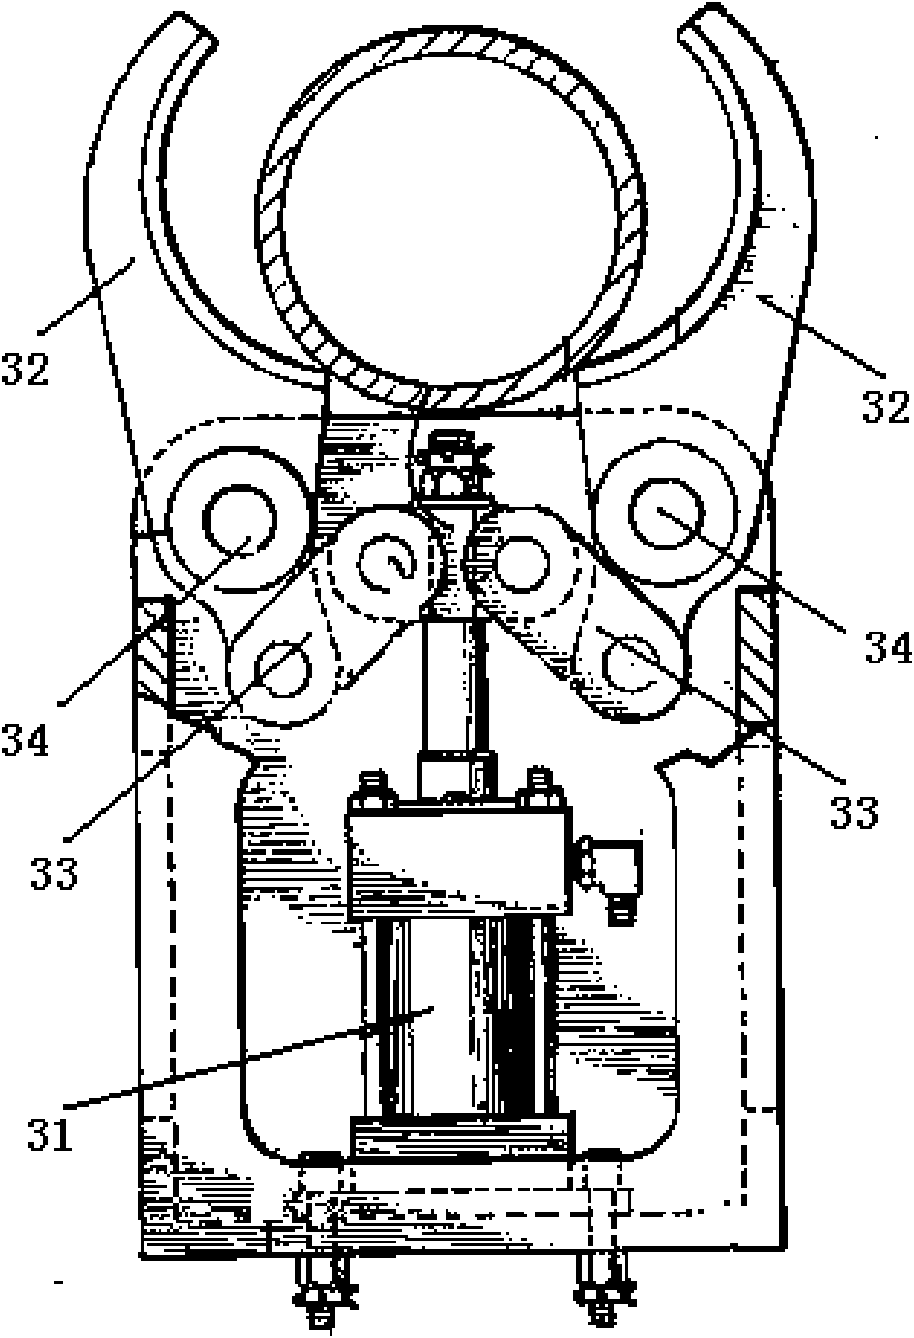 Clamping mechanism